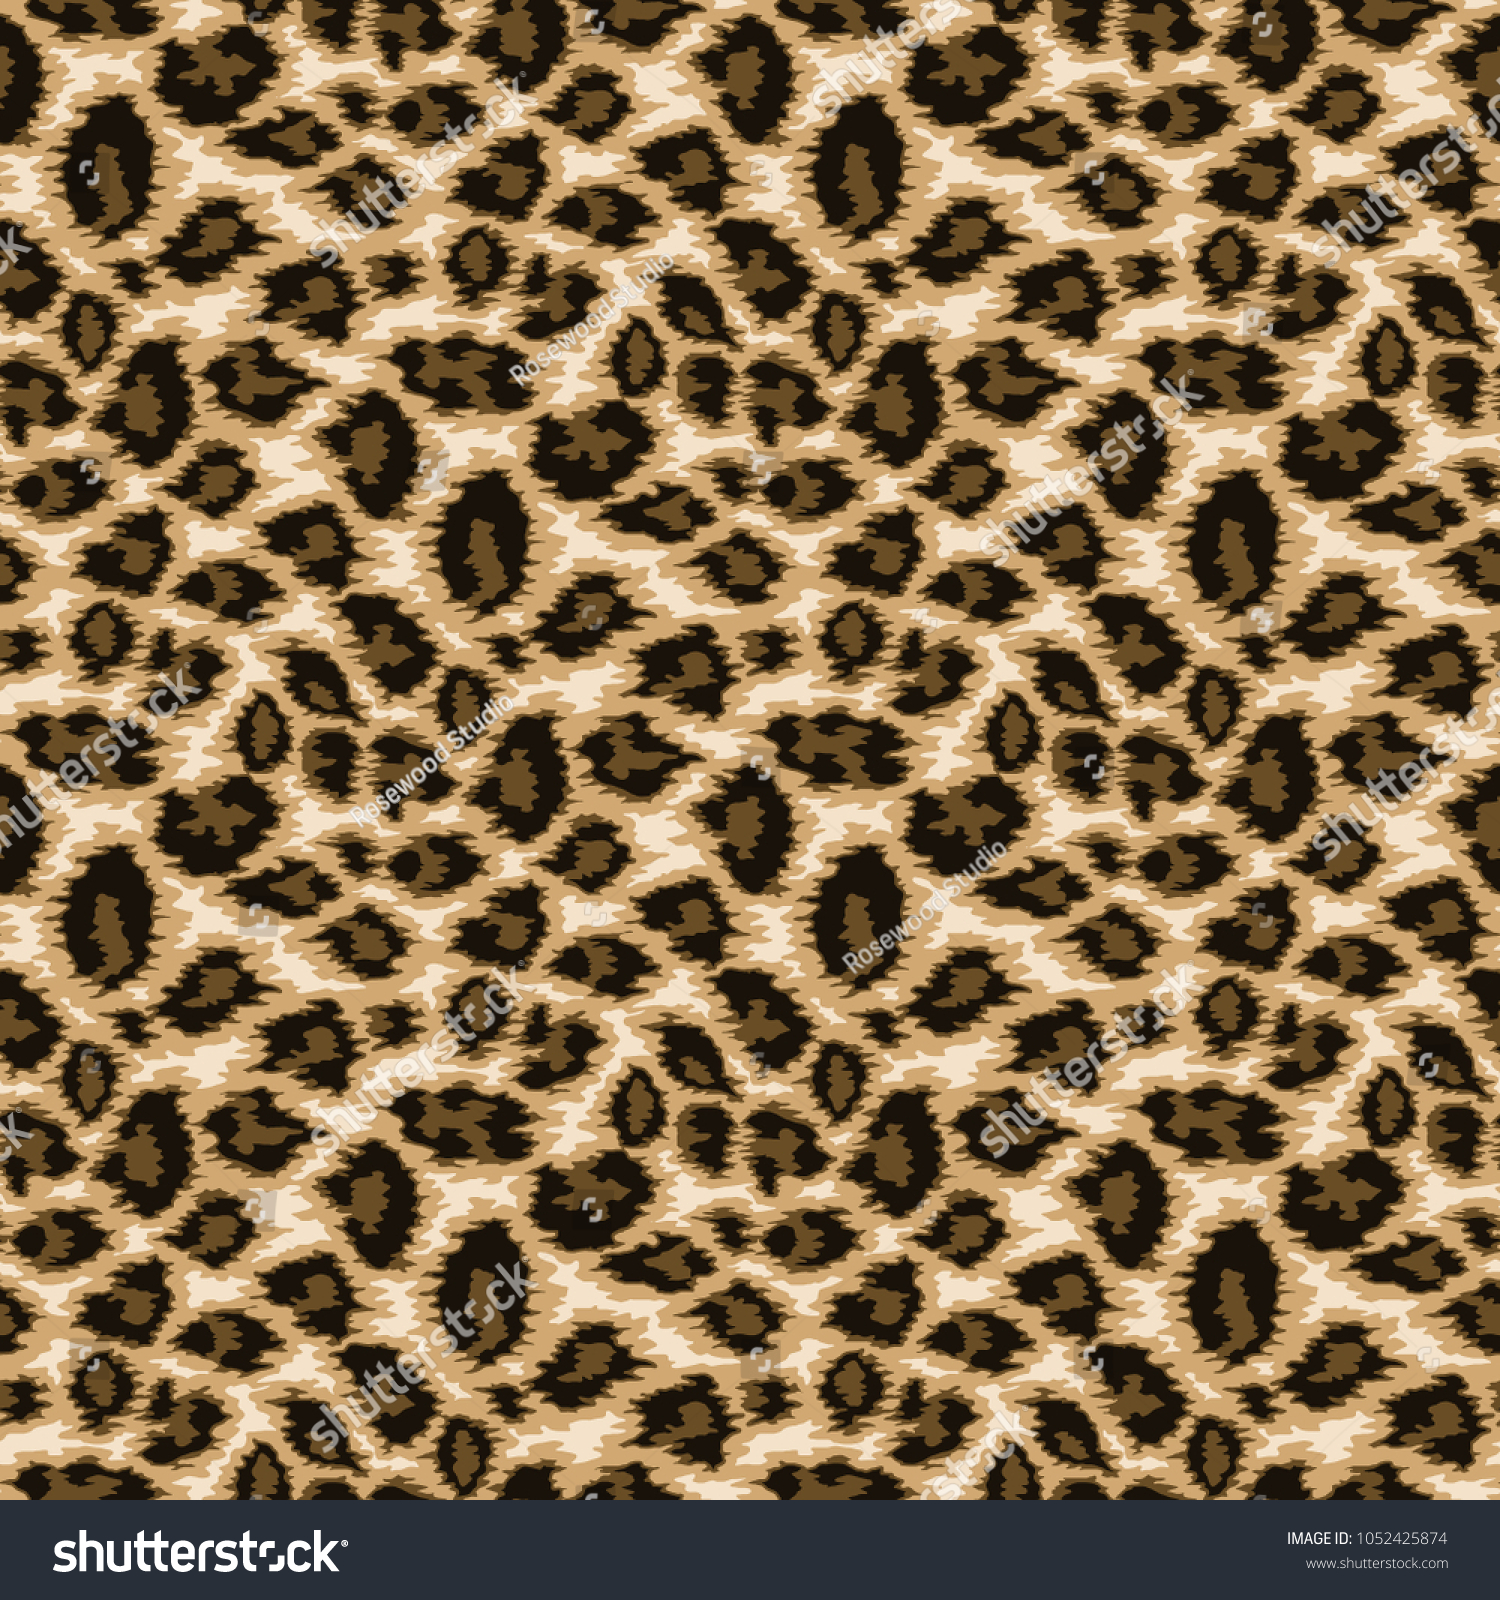 Seamless leopard skin #1052425874